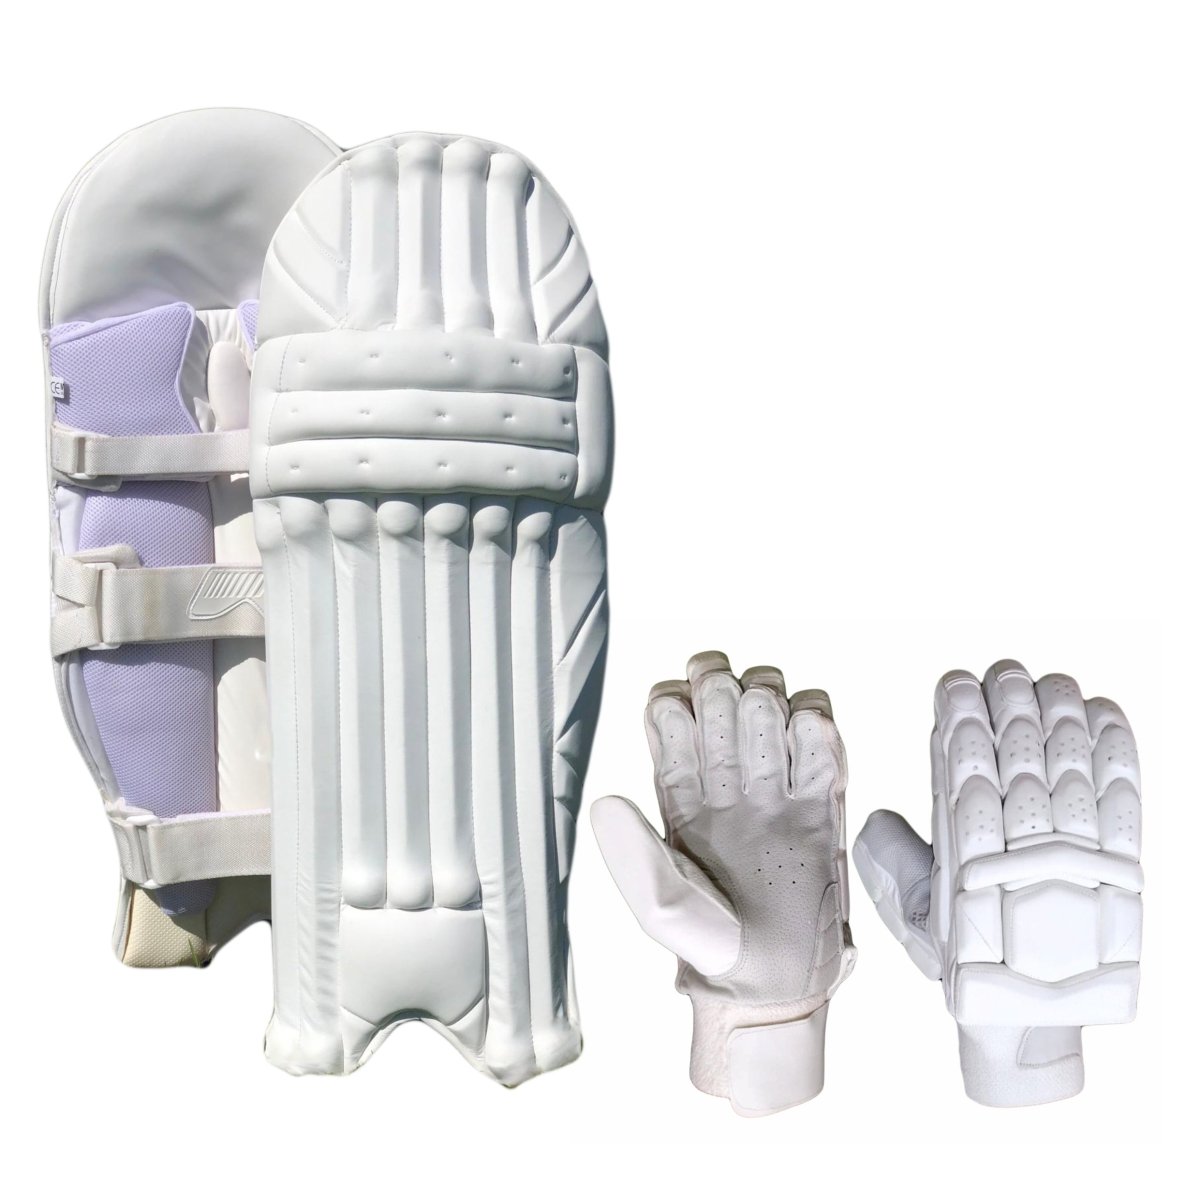 Cricket Batting Gloves BL-09 + Clean Skin Batting Pads Combo